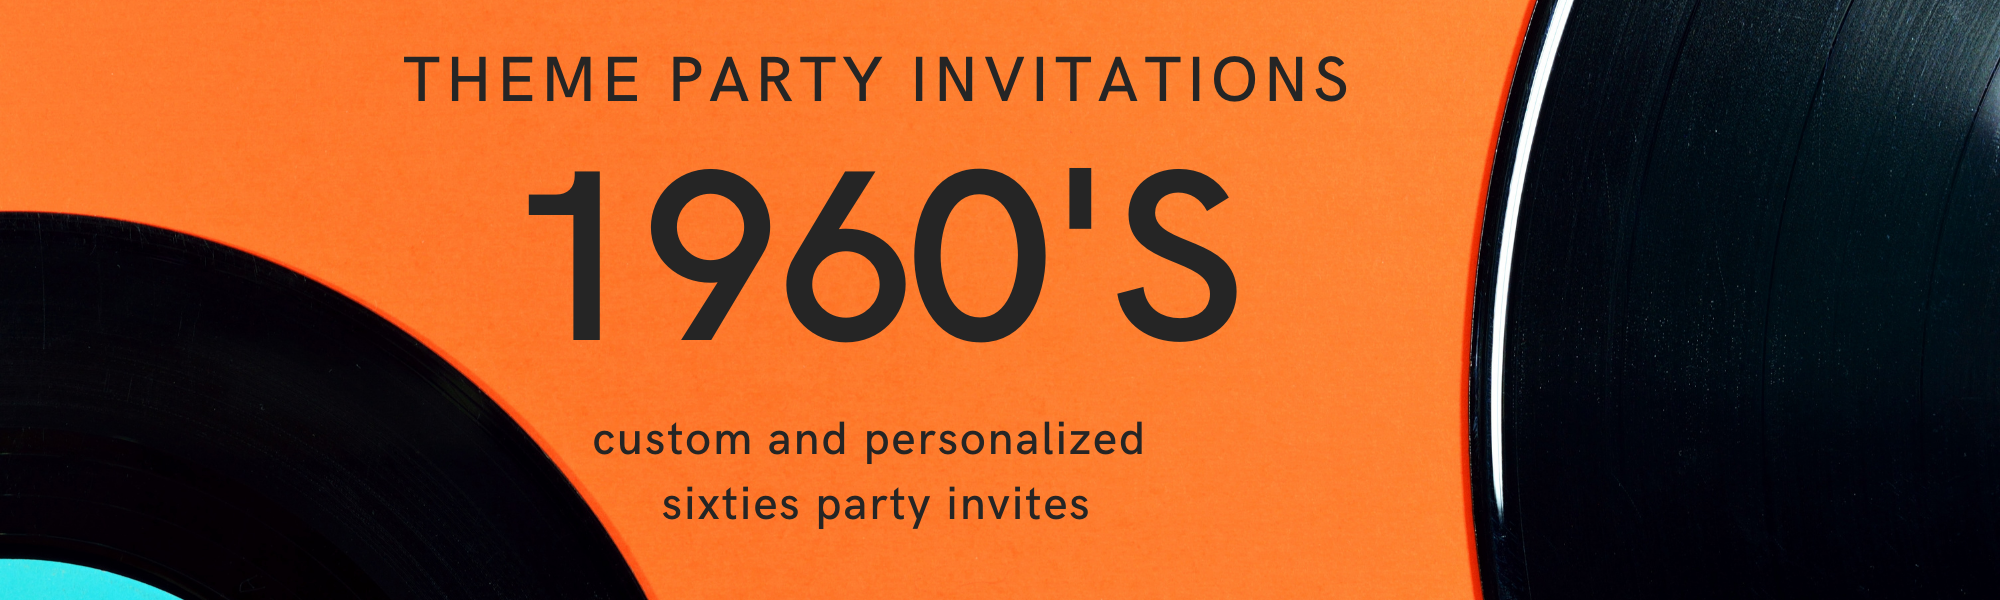 1960s theme party invitations